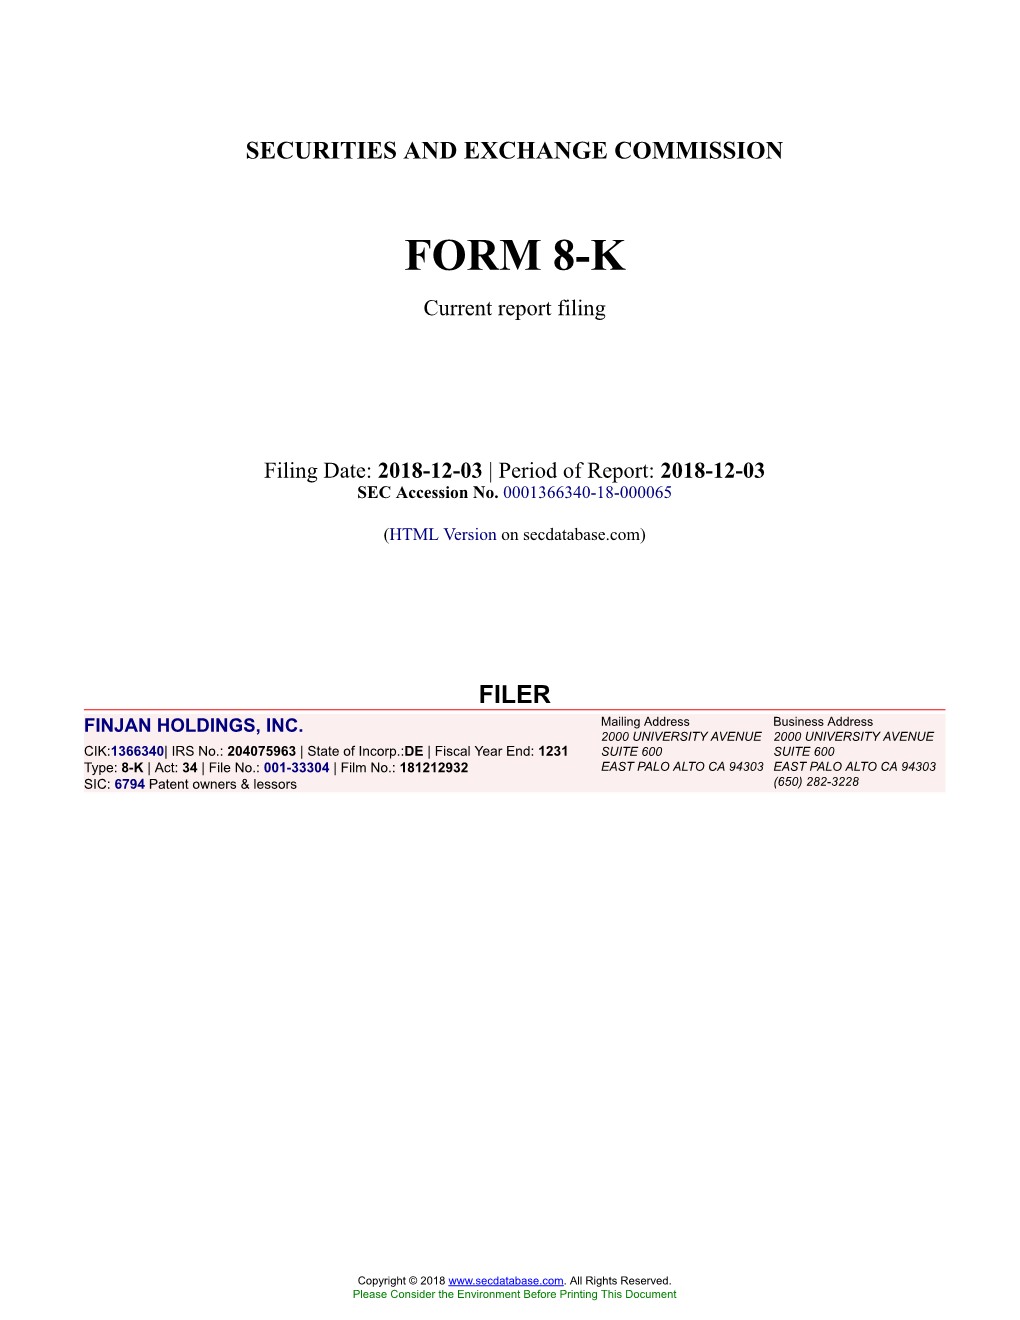 FINJAN HOLDINGS, INC. Form 8-K Current Event Report Filed 2018